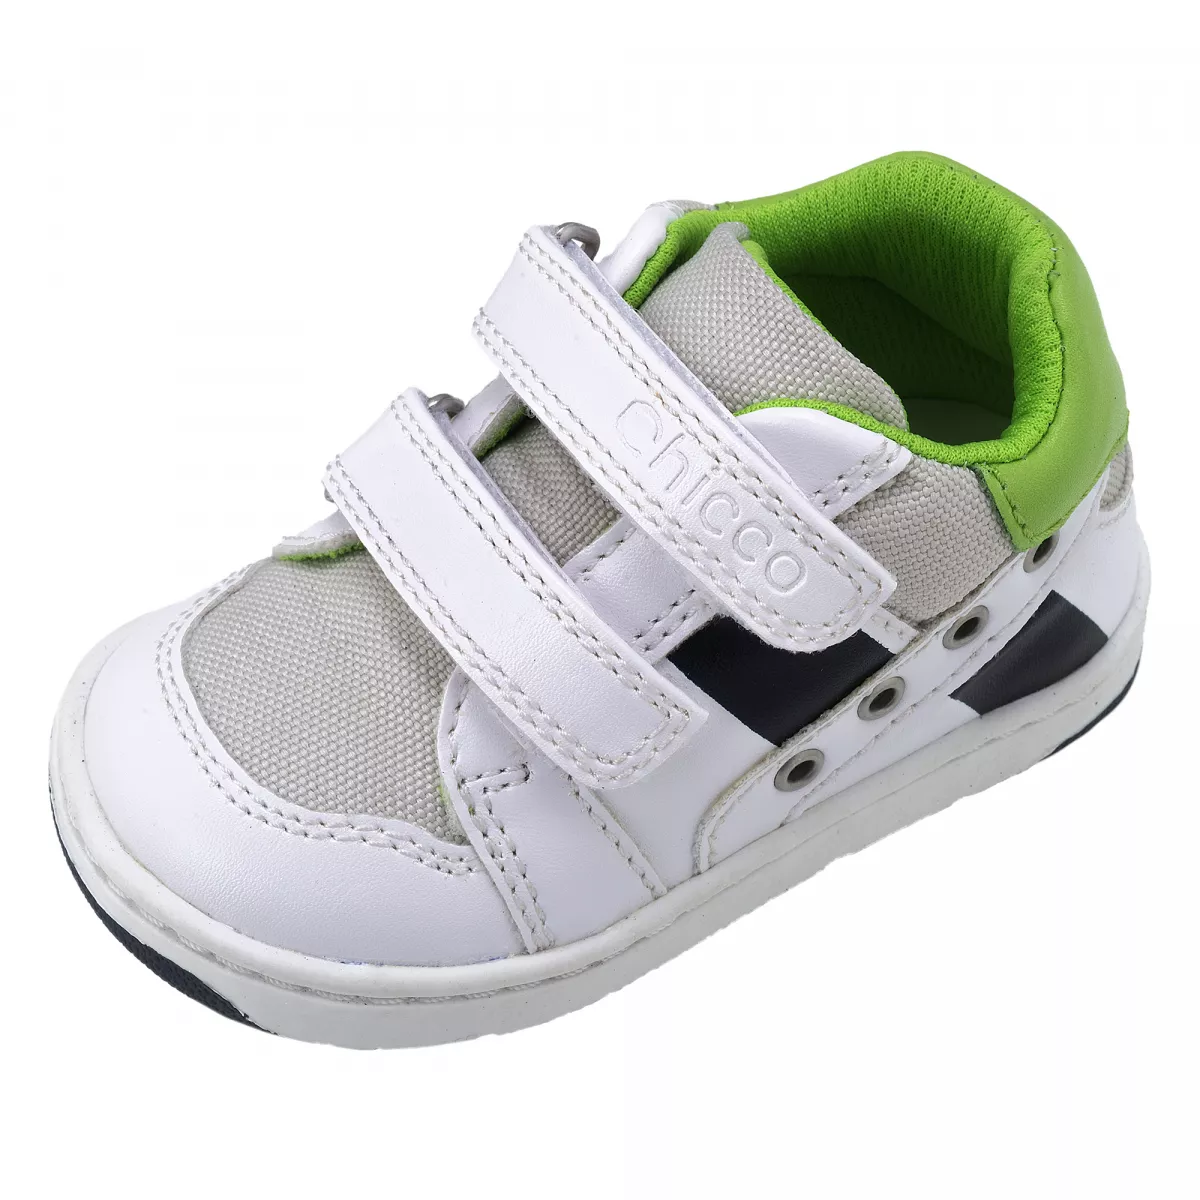 Pantofi sport copii Chicco Giuliano, alb cu model, 65653, 20